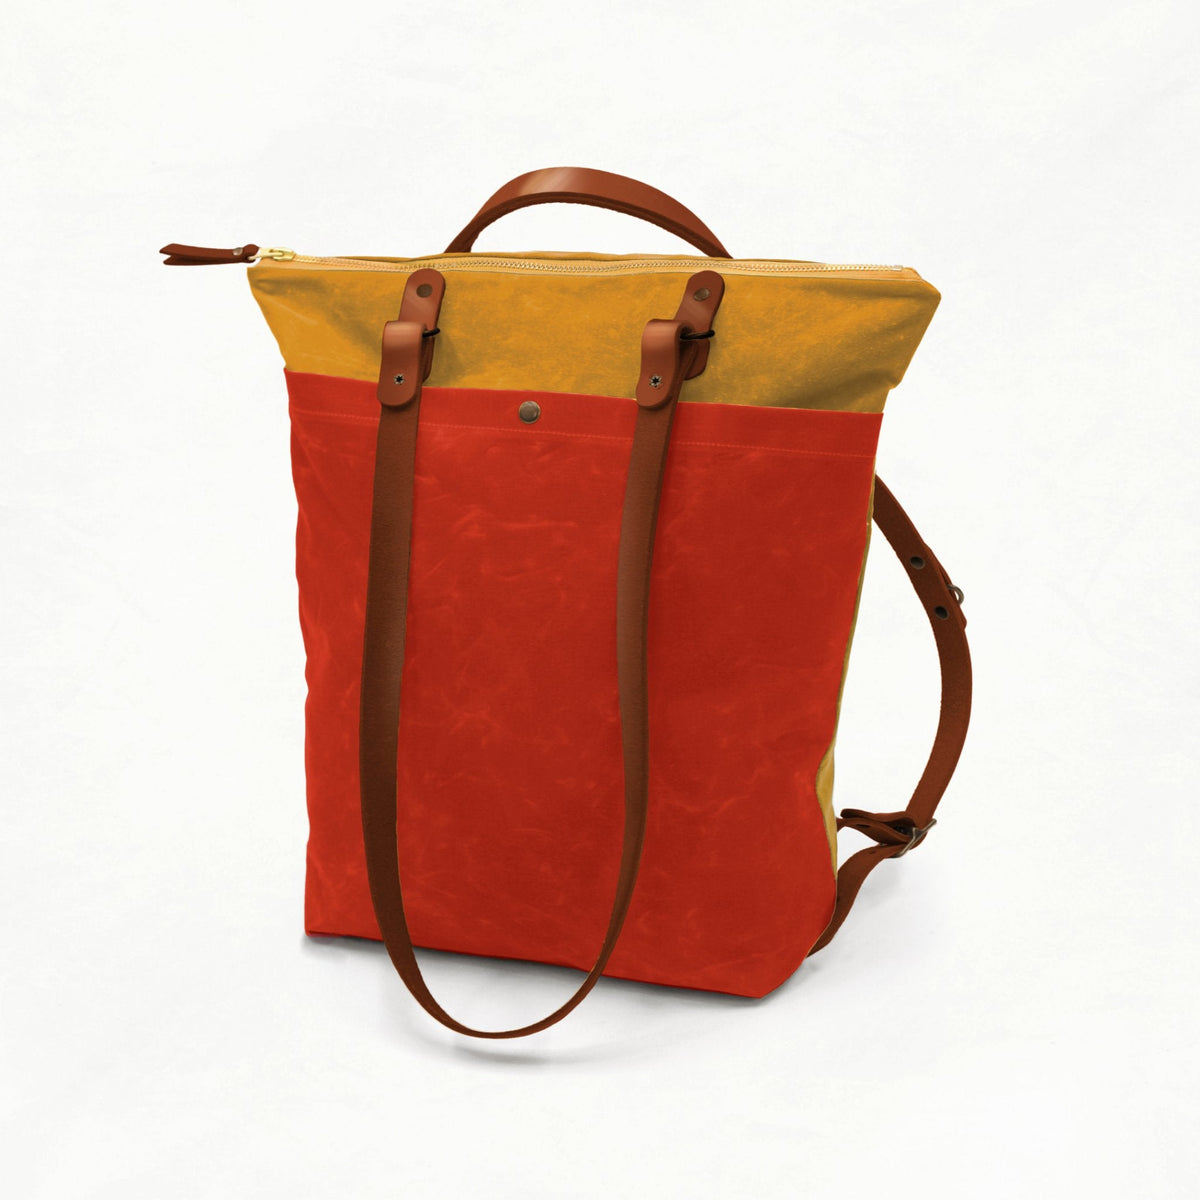 Maywood - Mustard Bag Maker Kit - MAY - MUS - PER - CHEST - AB - MUS - Maker Kit - Klum House